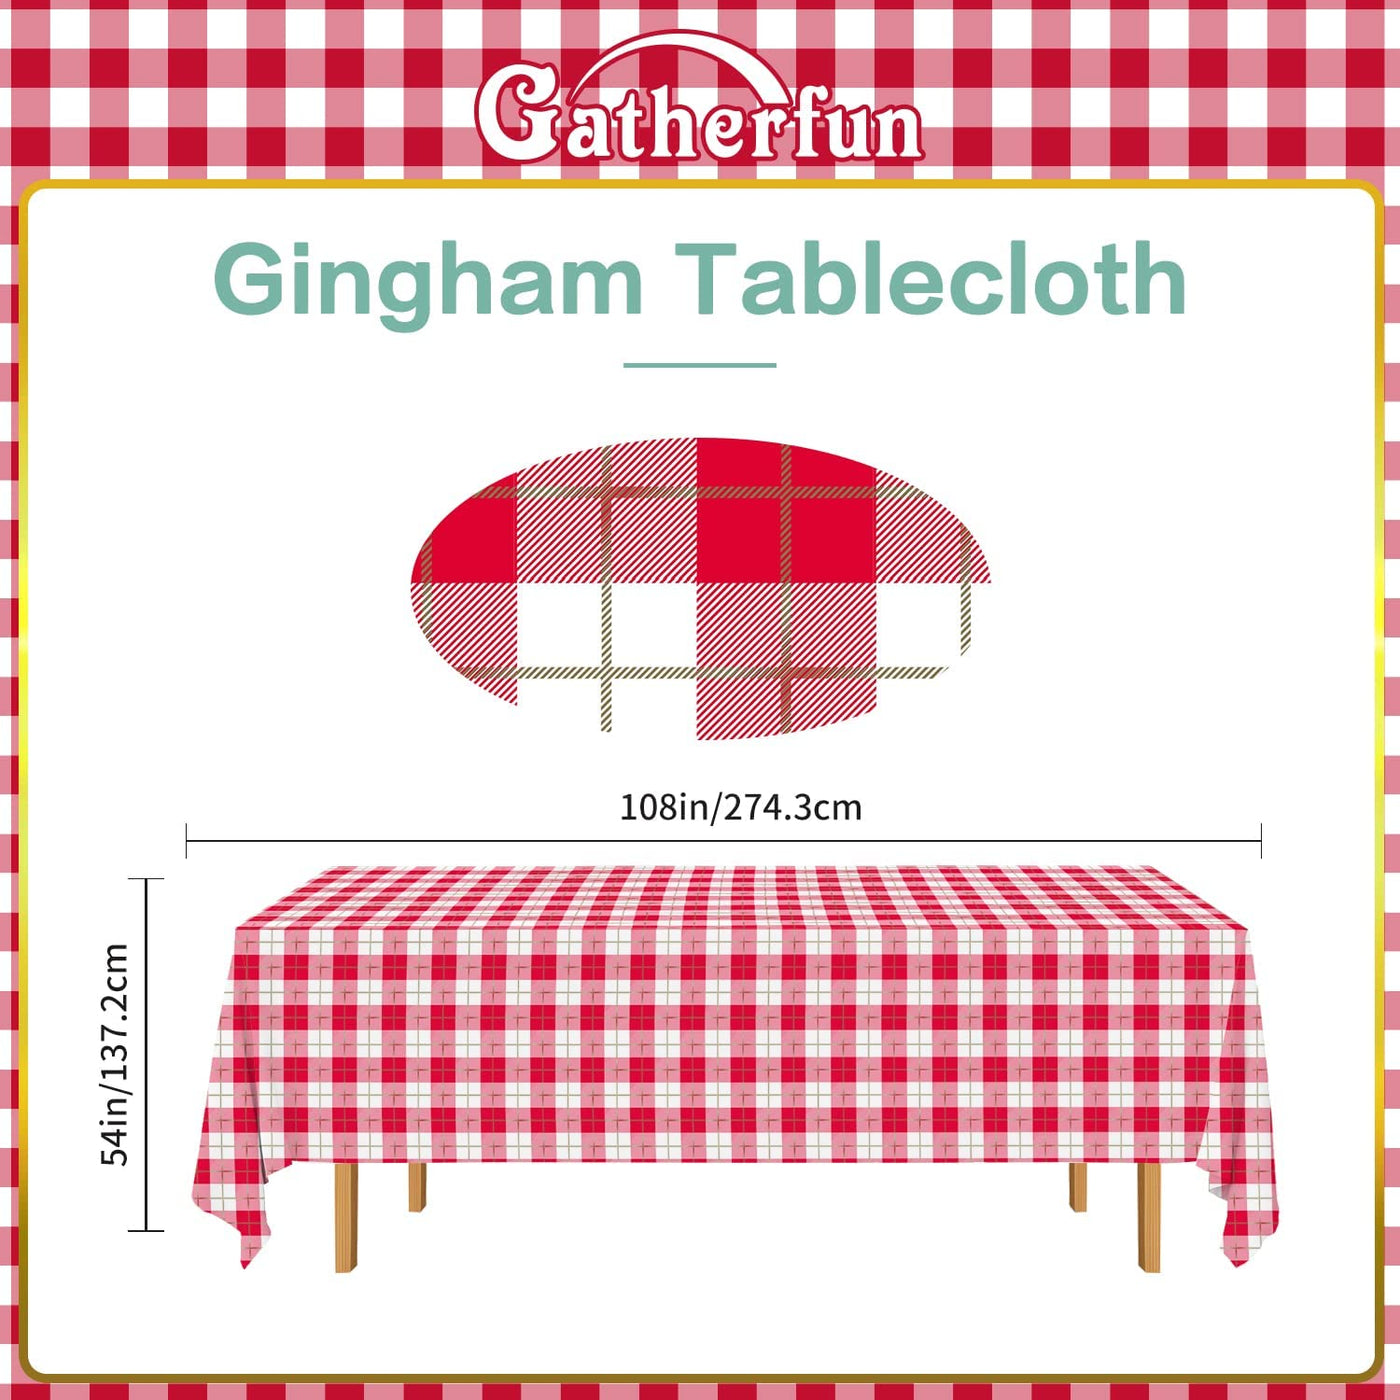  3PCS Red White Gingham Rectangular Waterproof Tablecloth